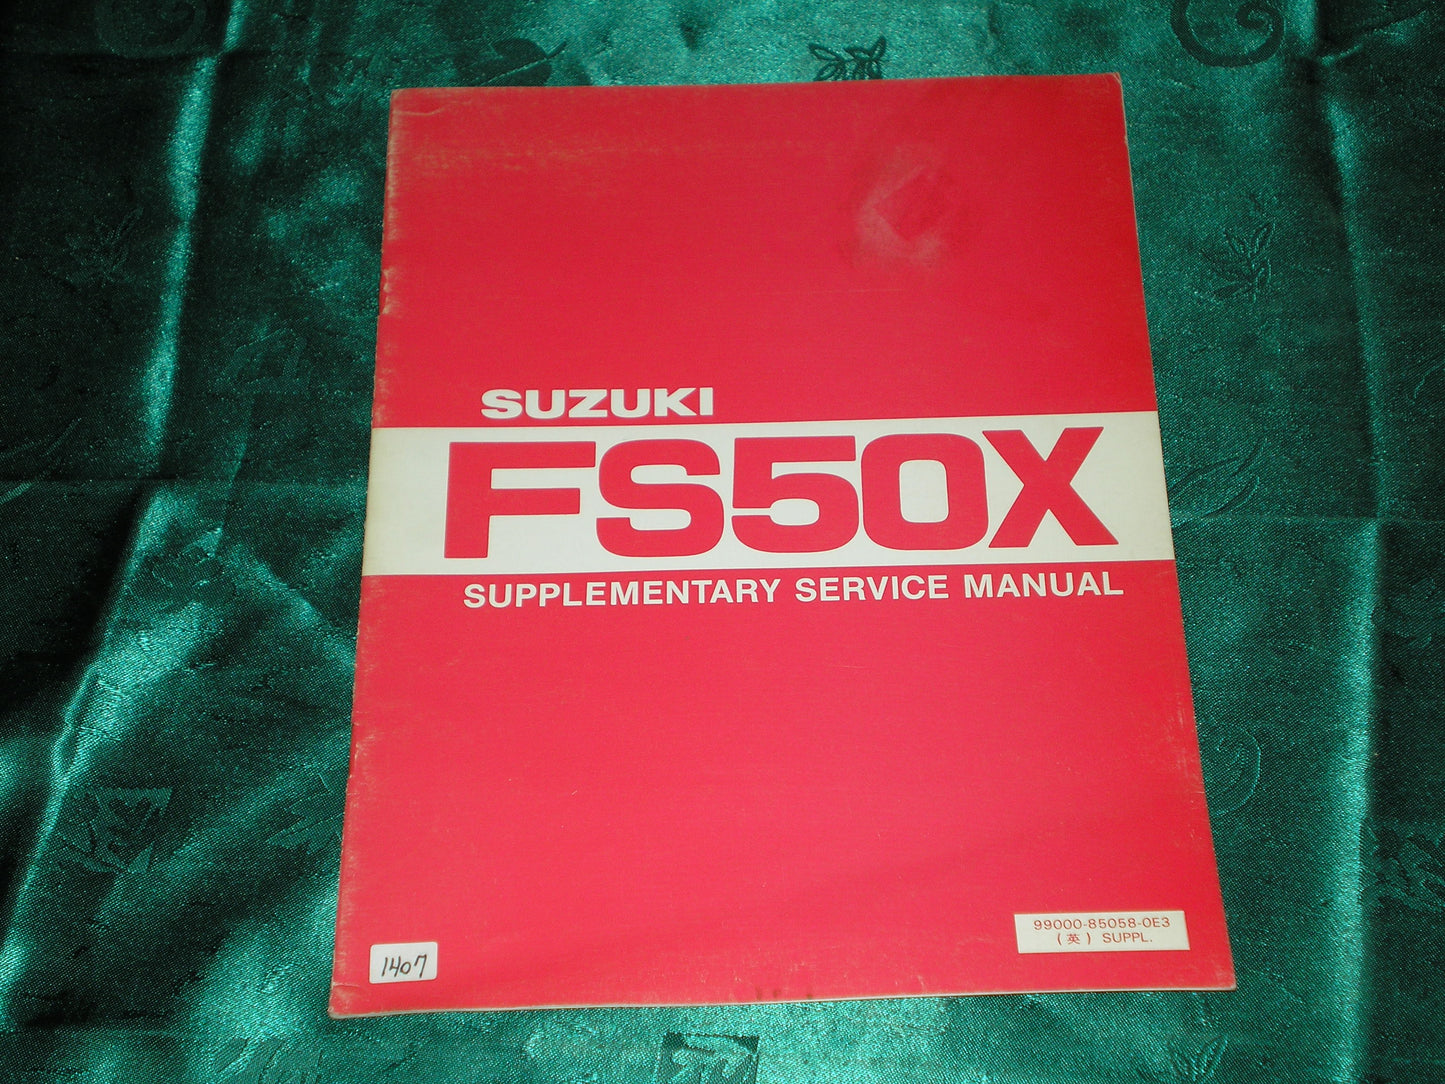 SUZUKI FS50 X  FS50X  1981  Service Manual Supplement  99000-85058-0E3  #1407